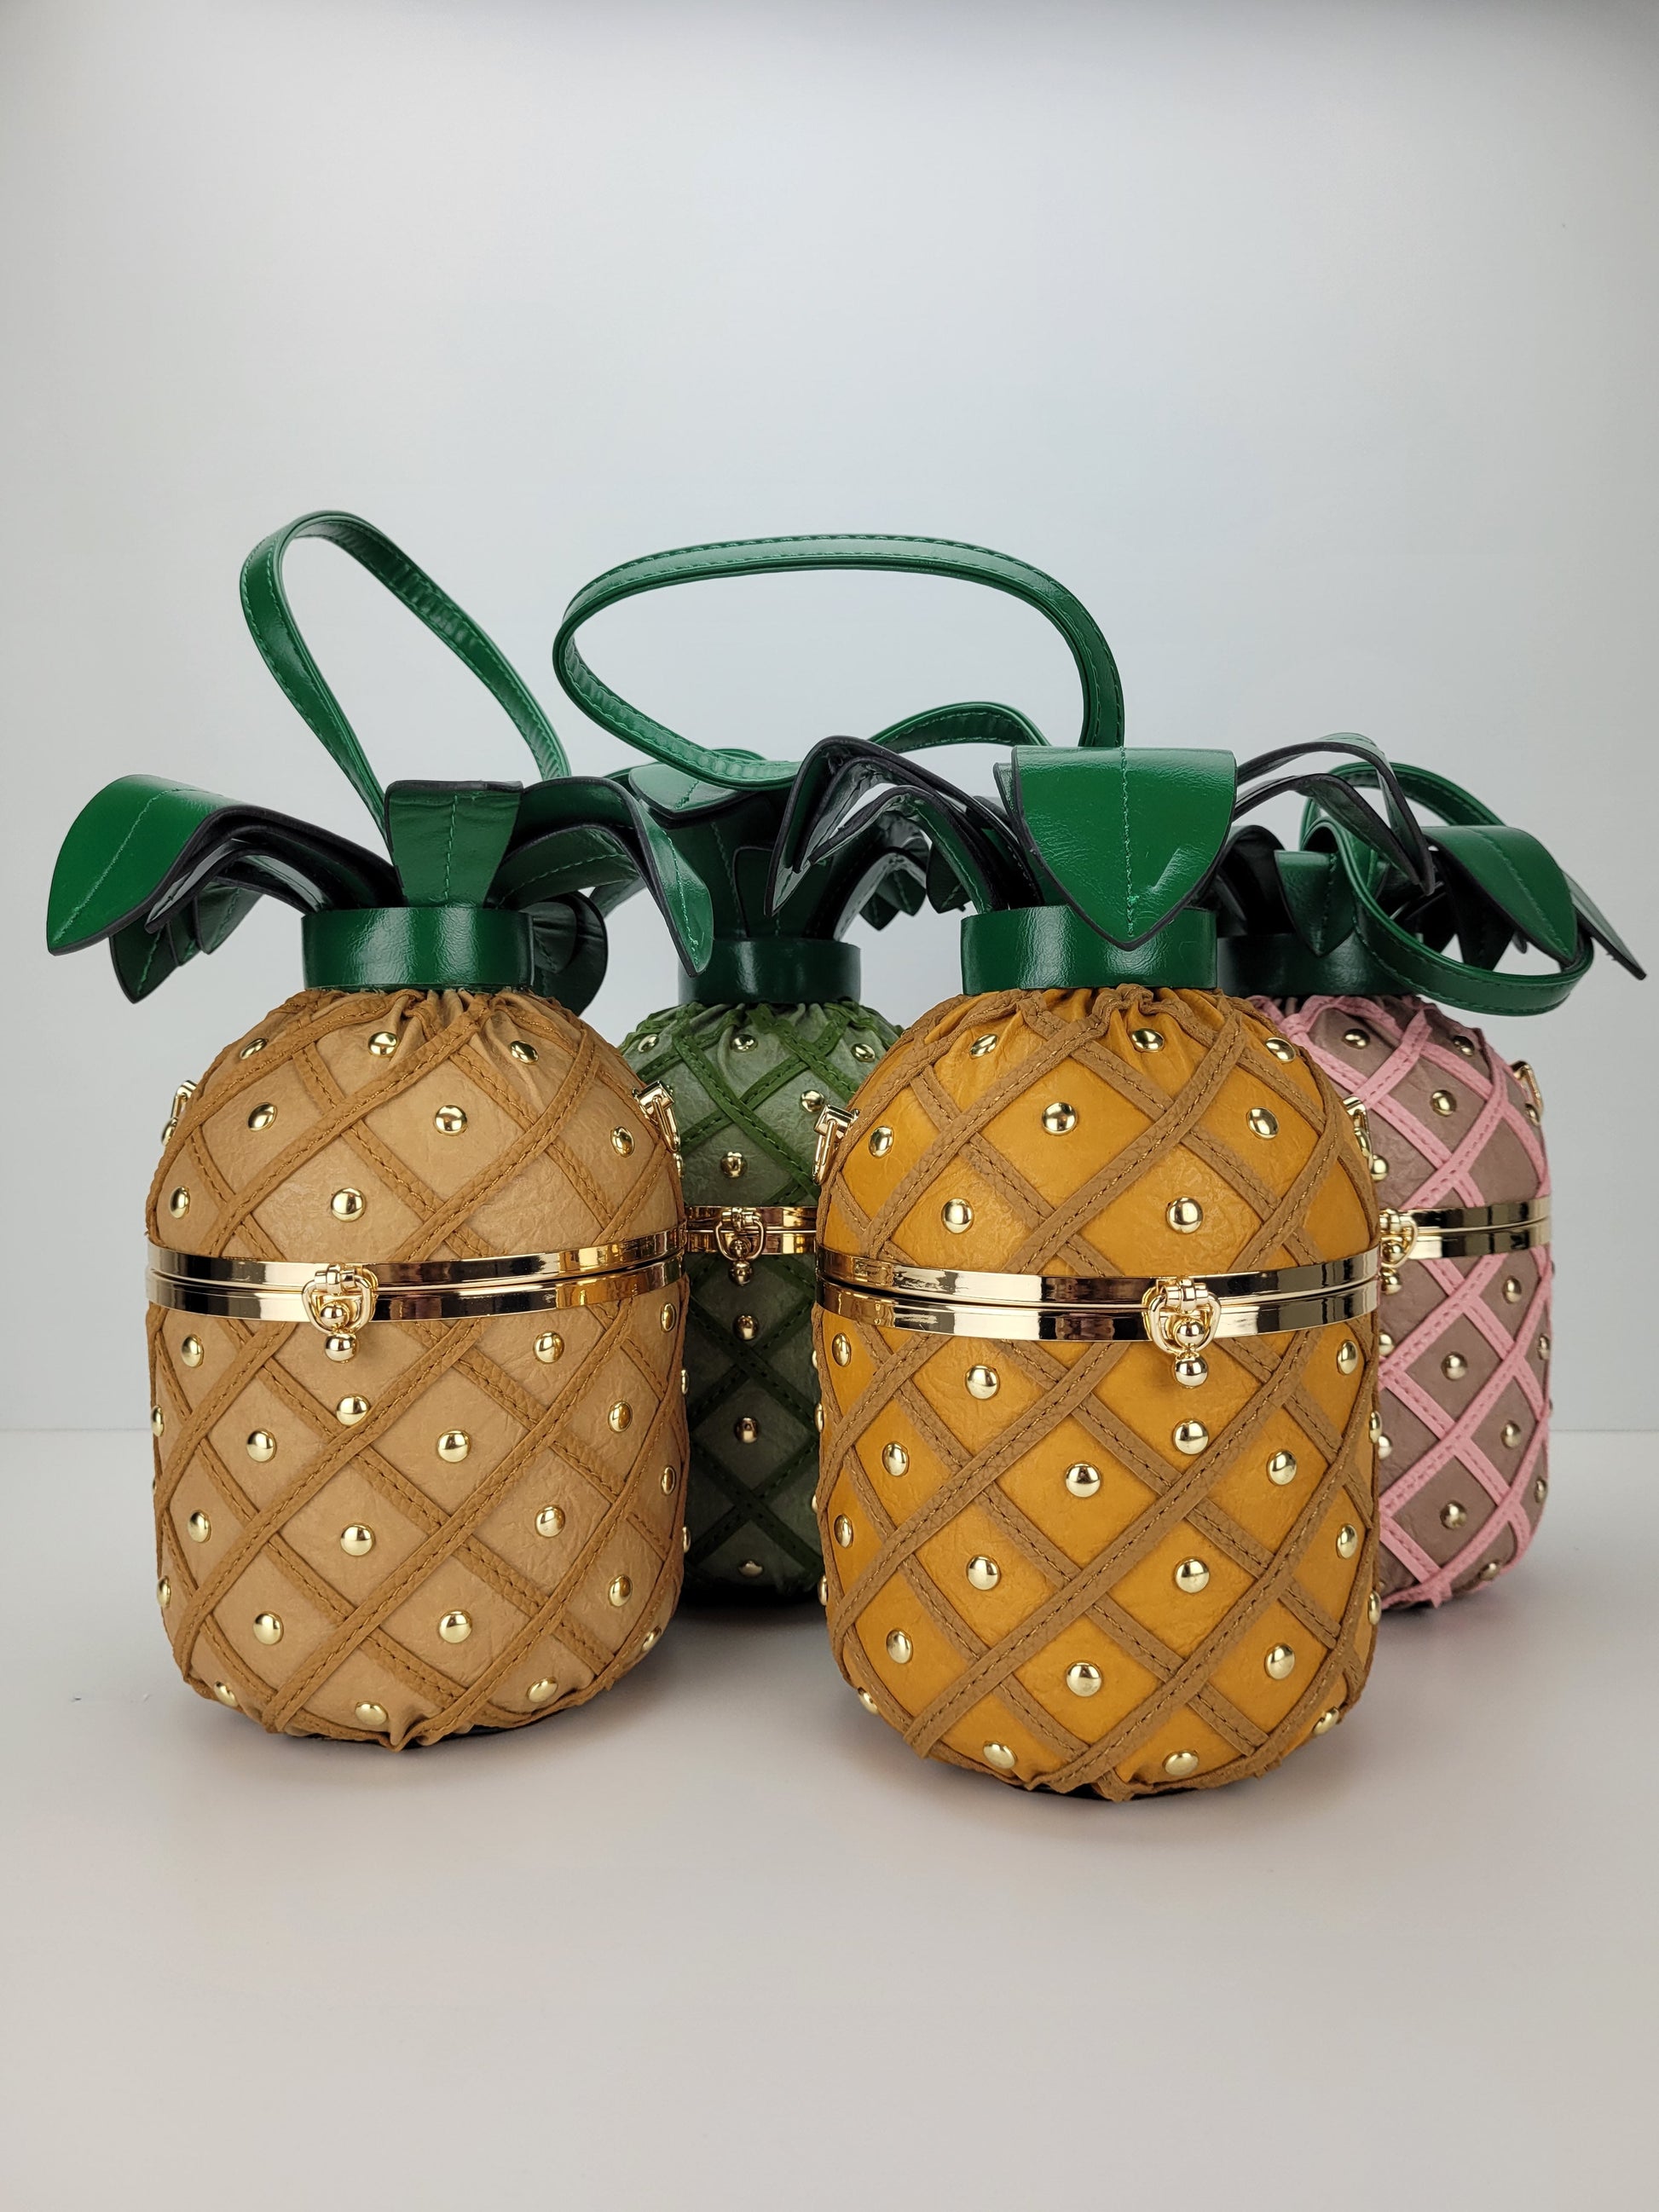 green, tan, yellow and pink pineapple handbags